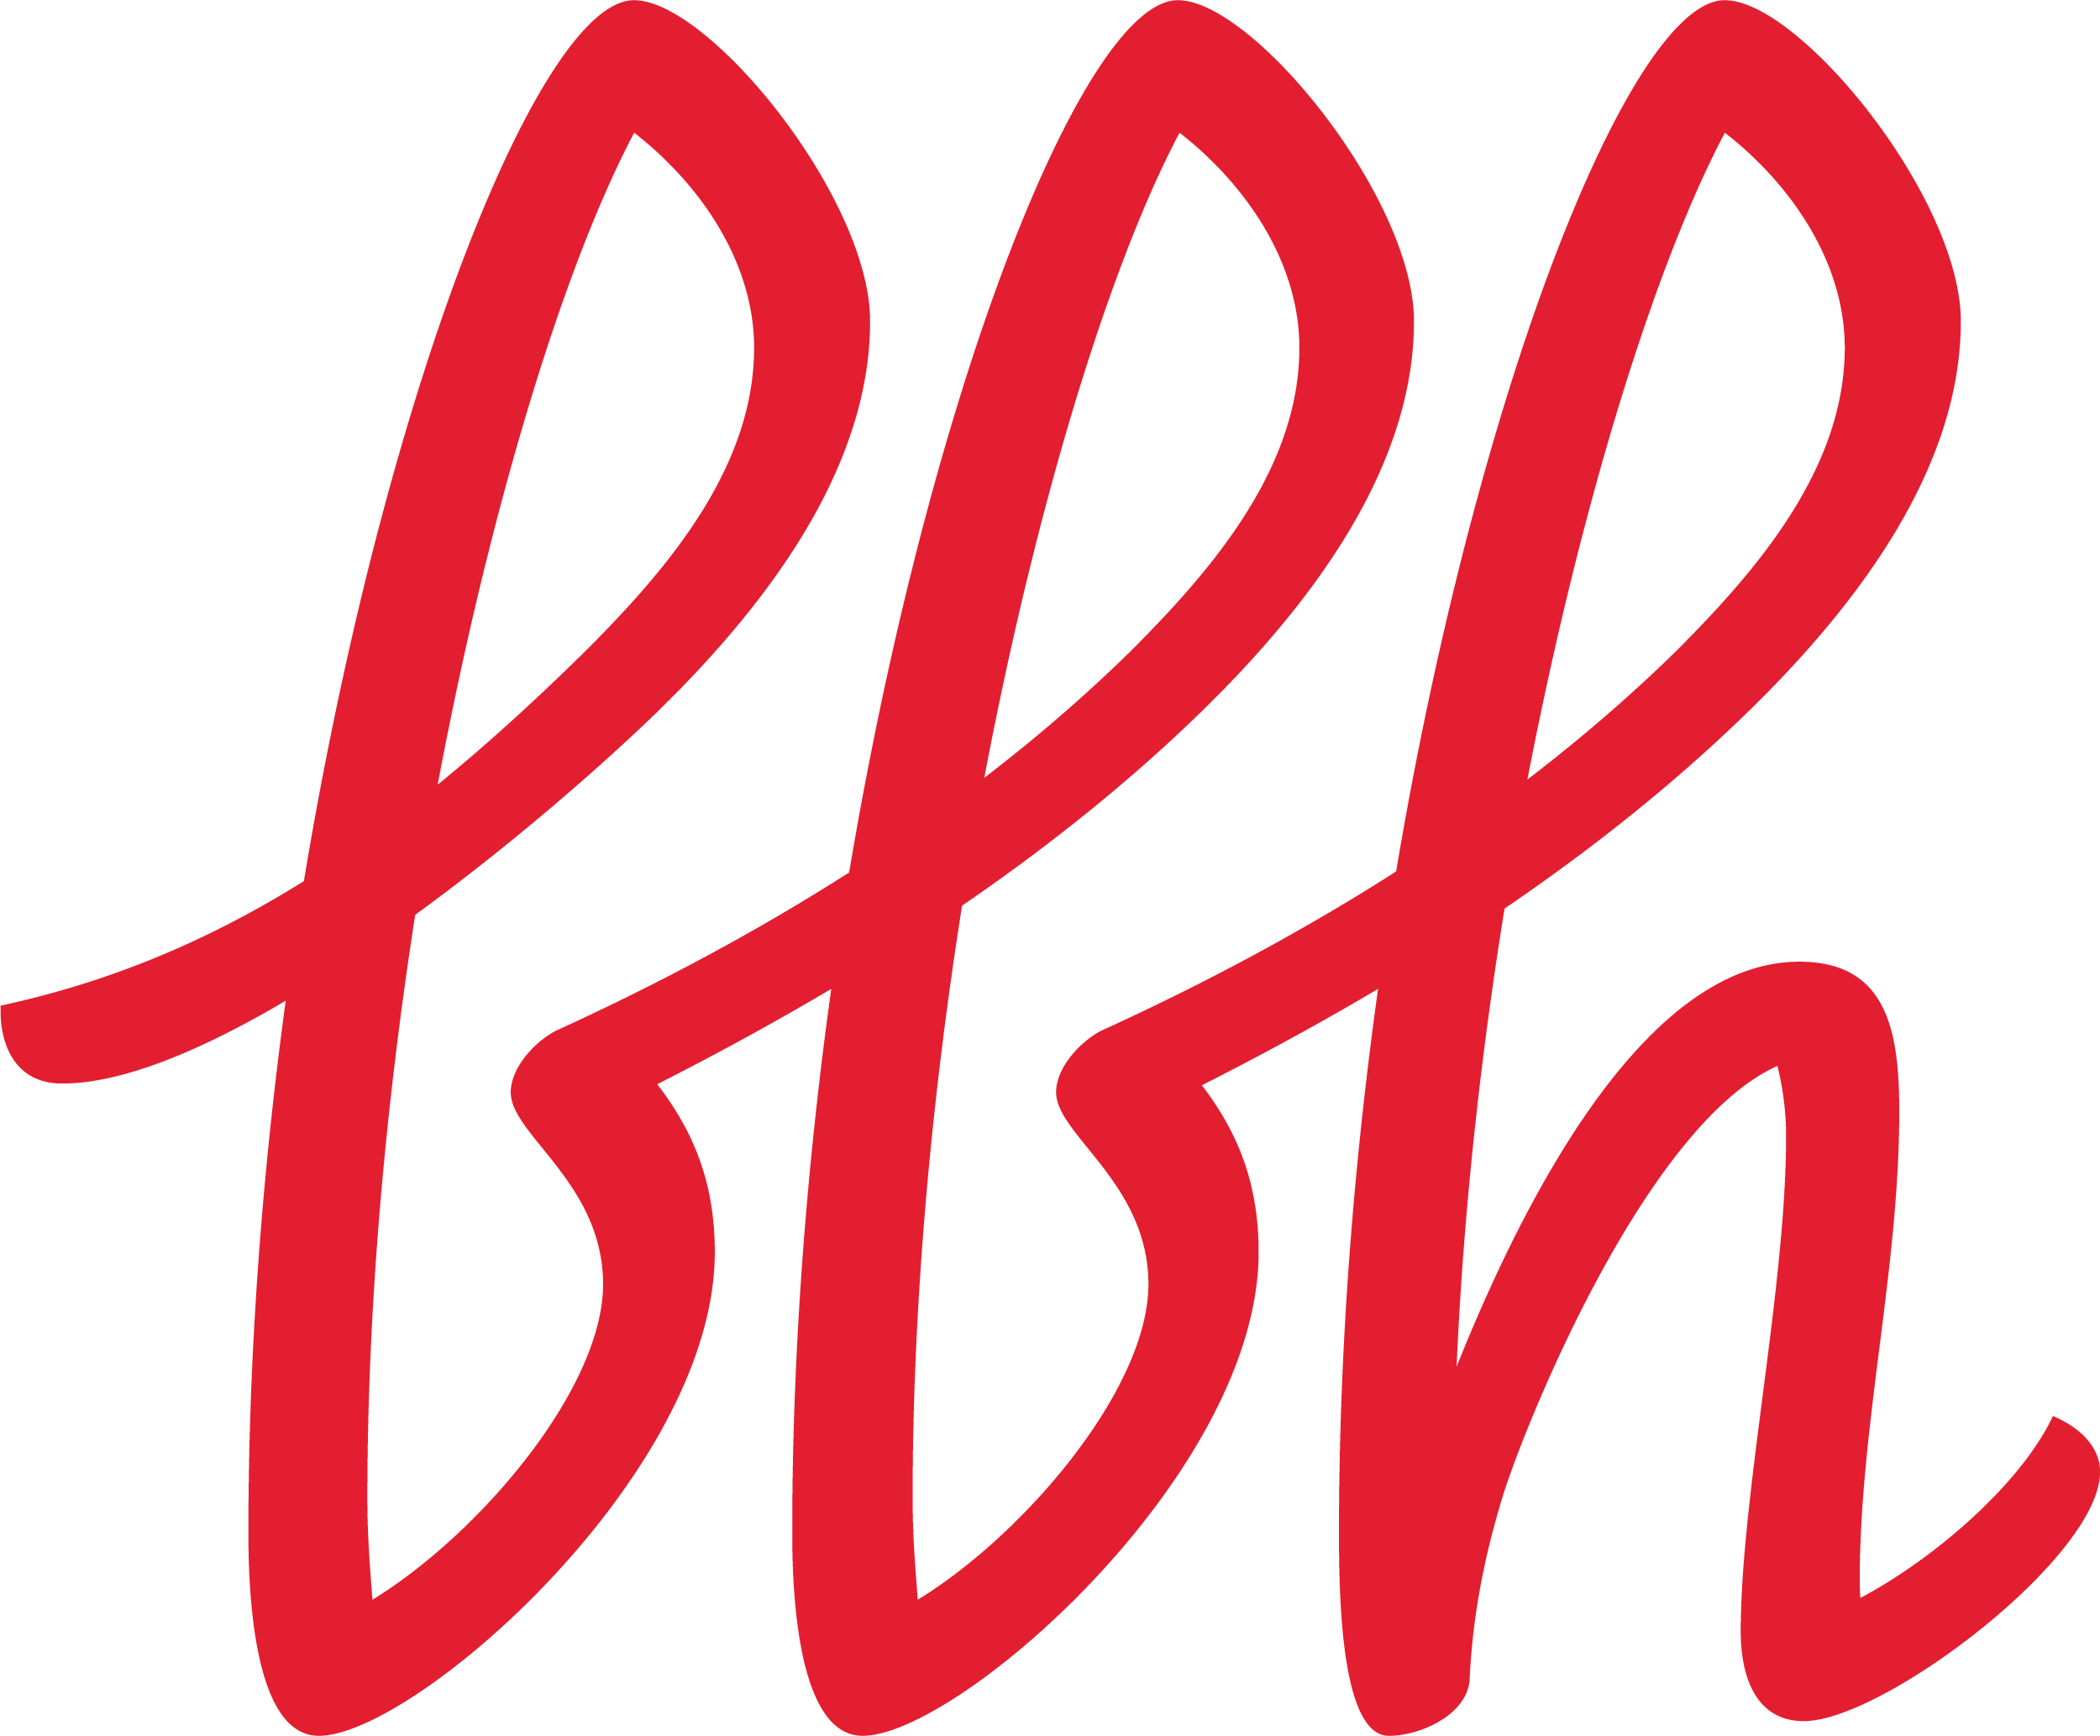 bbh logo